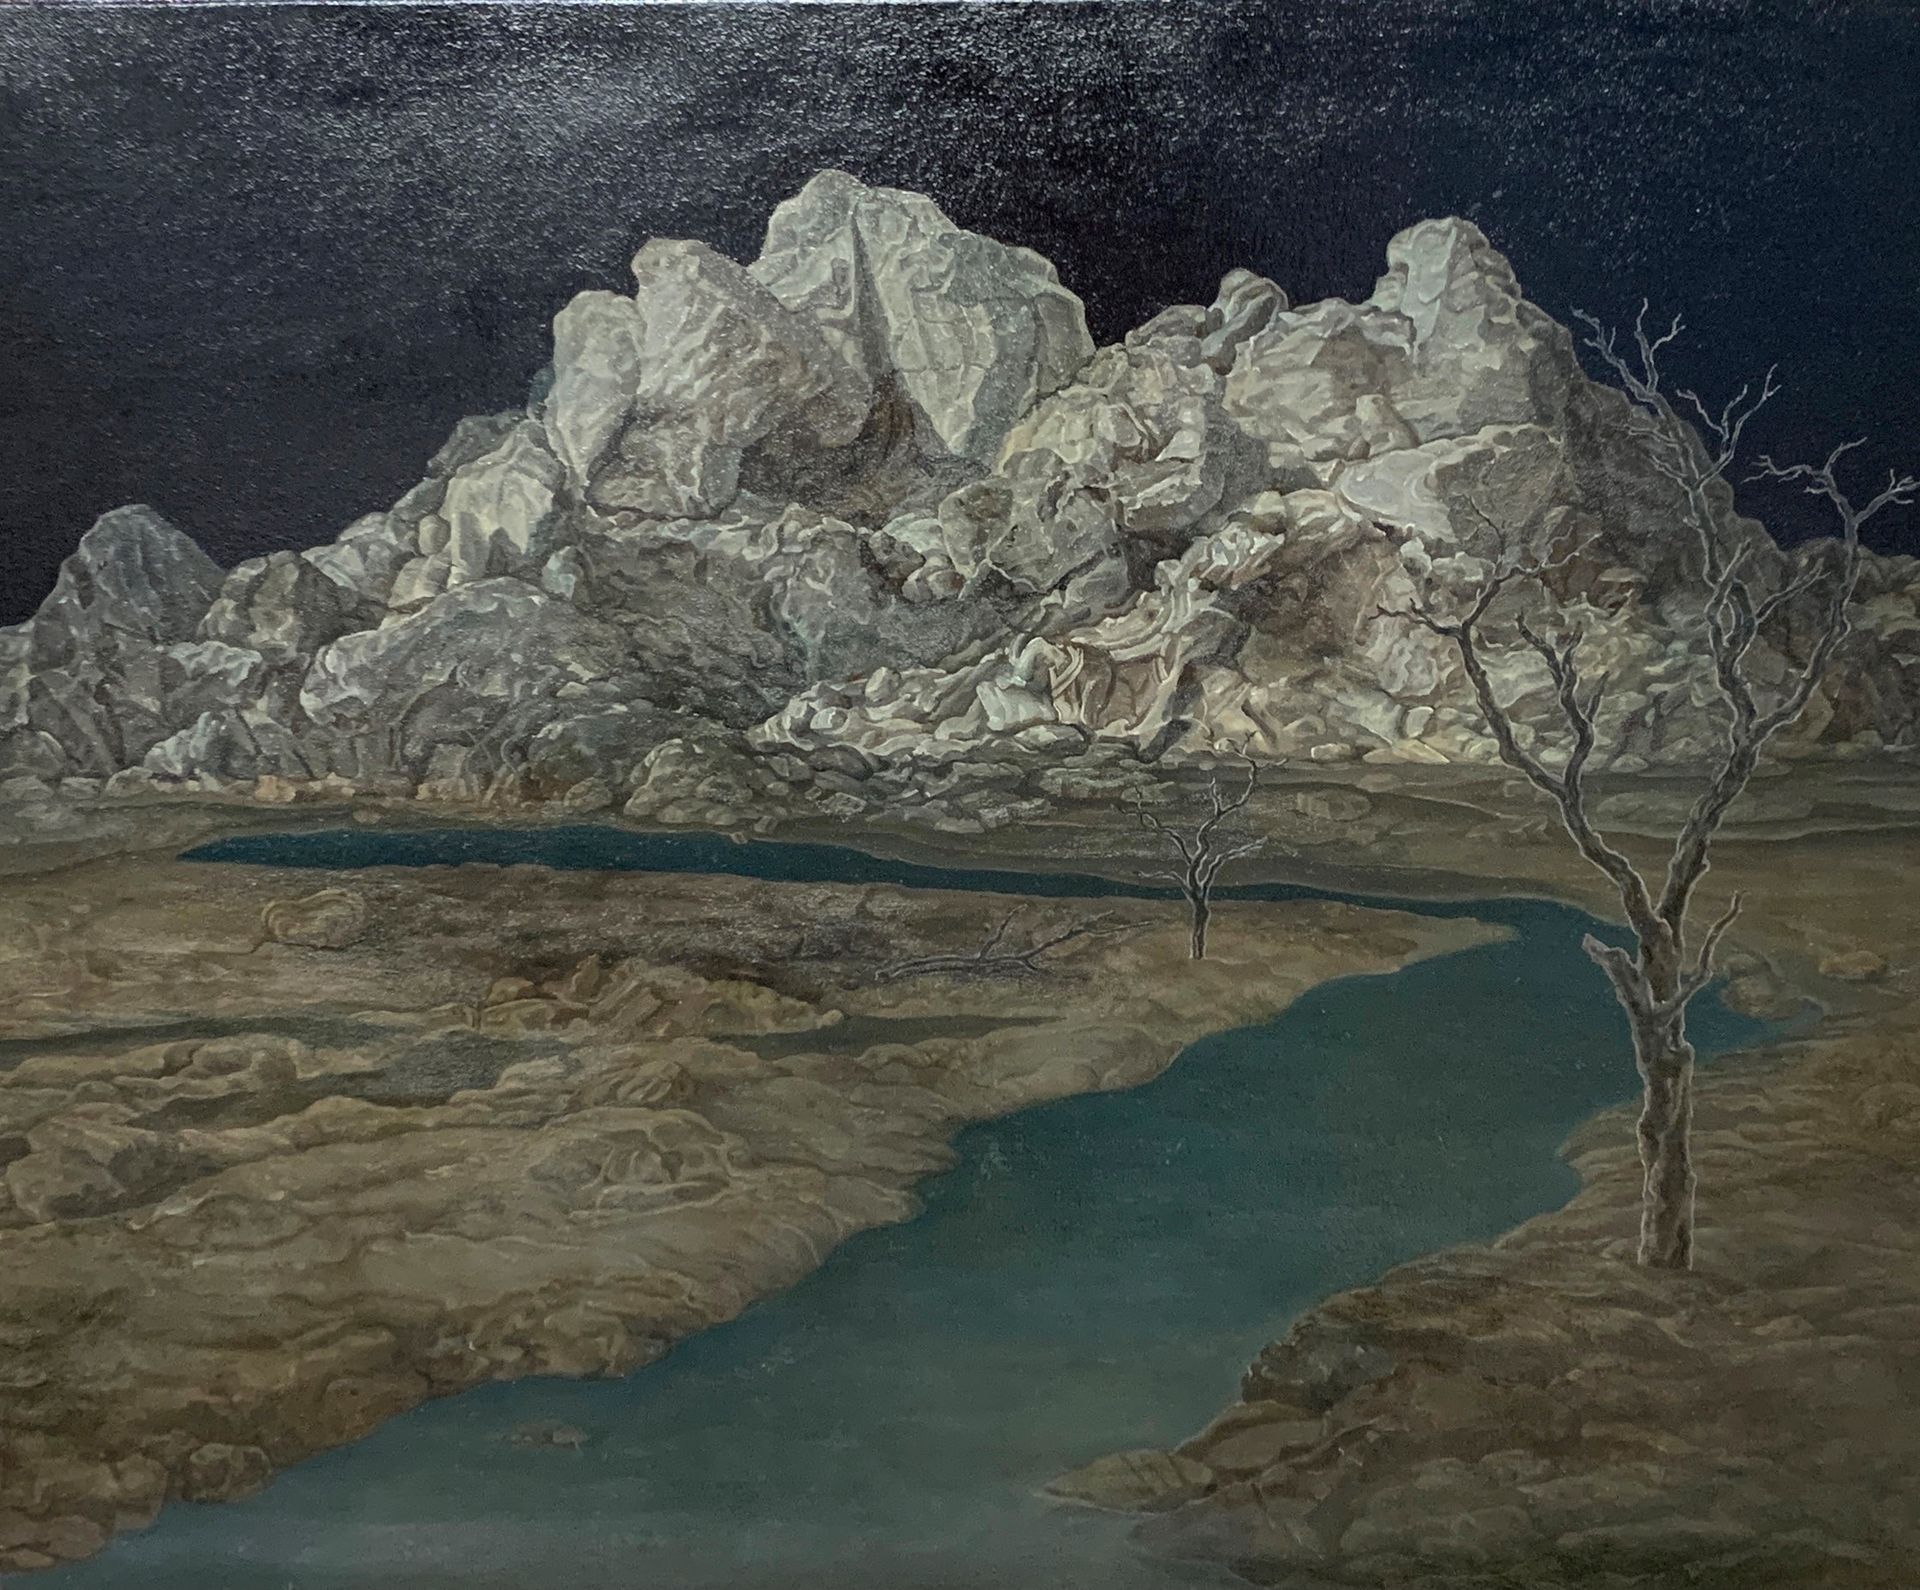 LI DONGLU (1982) Mountain and river, 2016
Öl auf Leinwand
Abm.: 38 x 46 cm